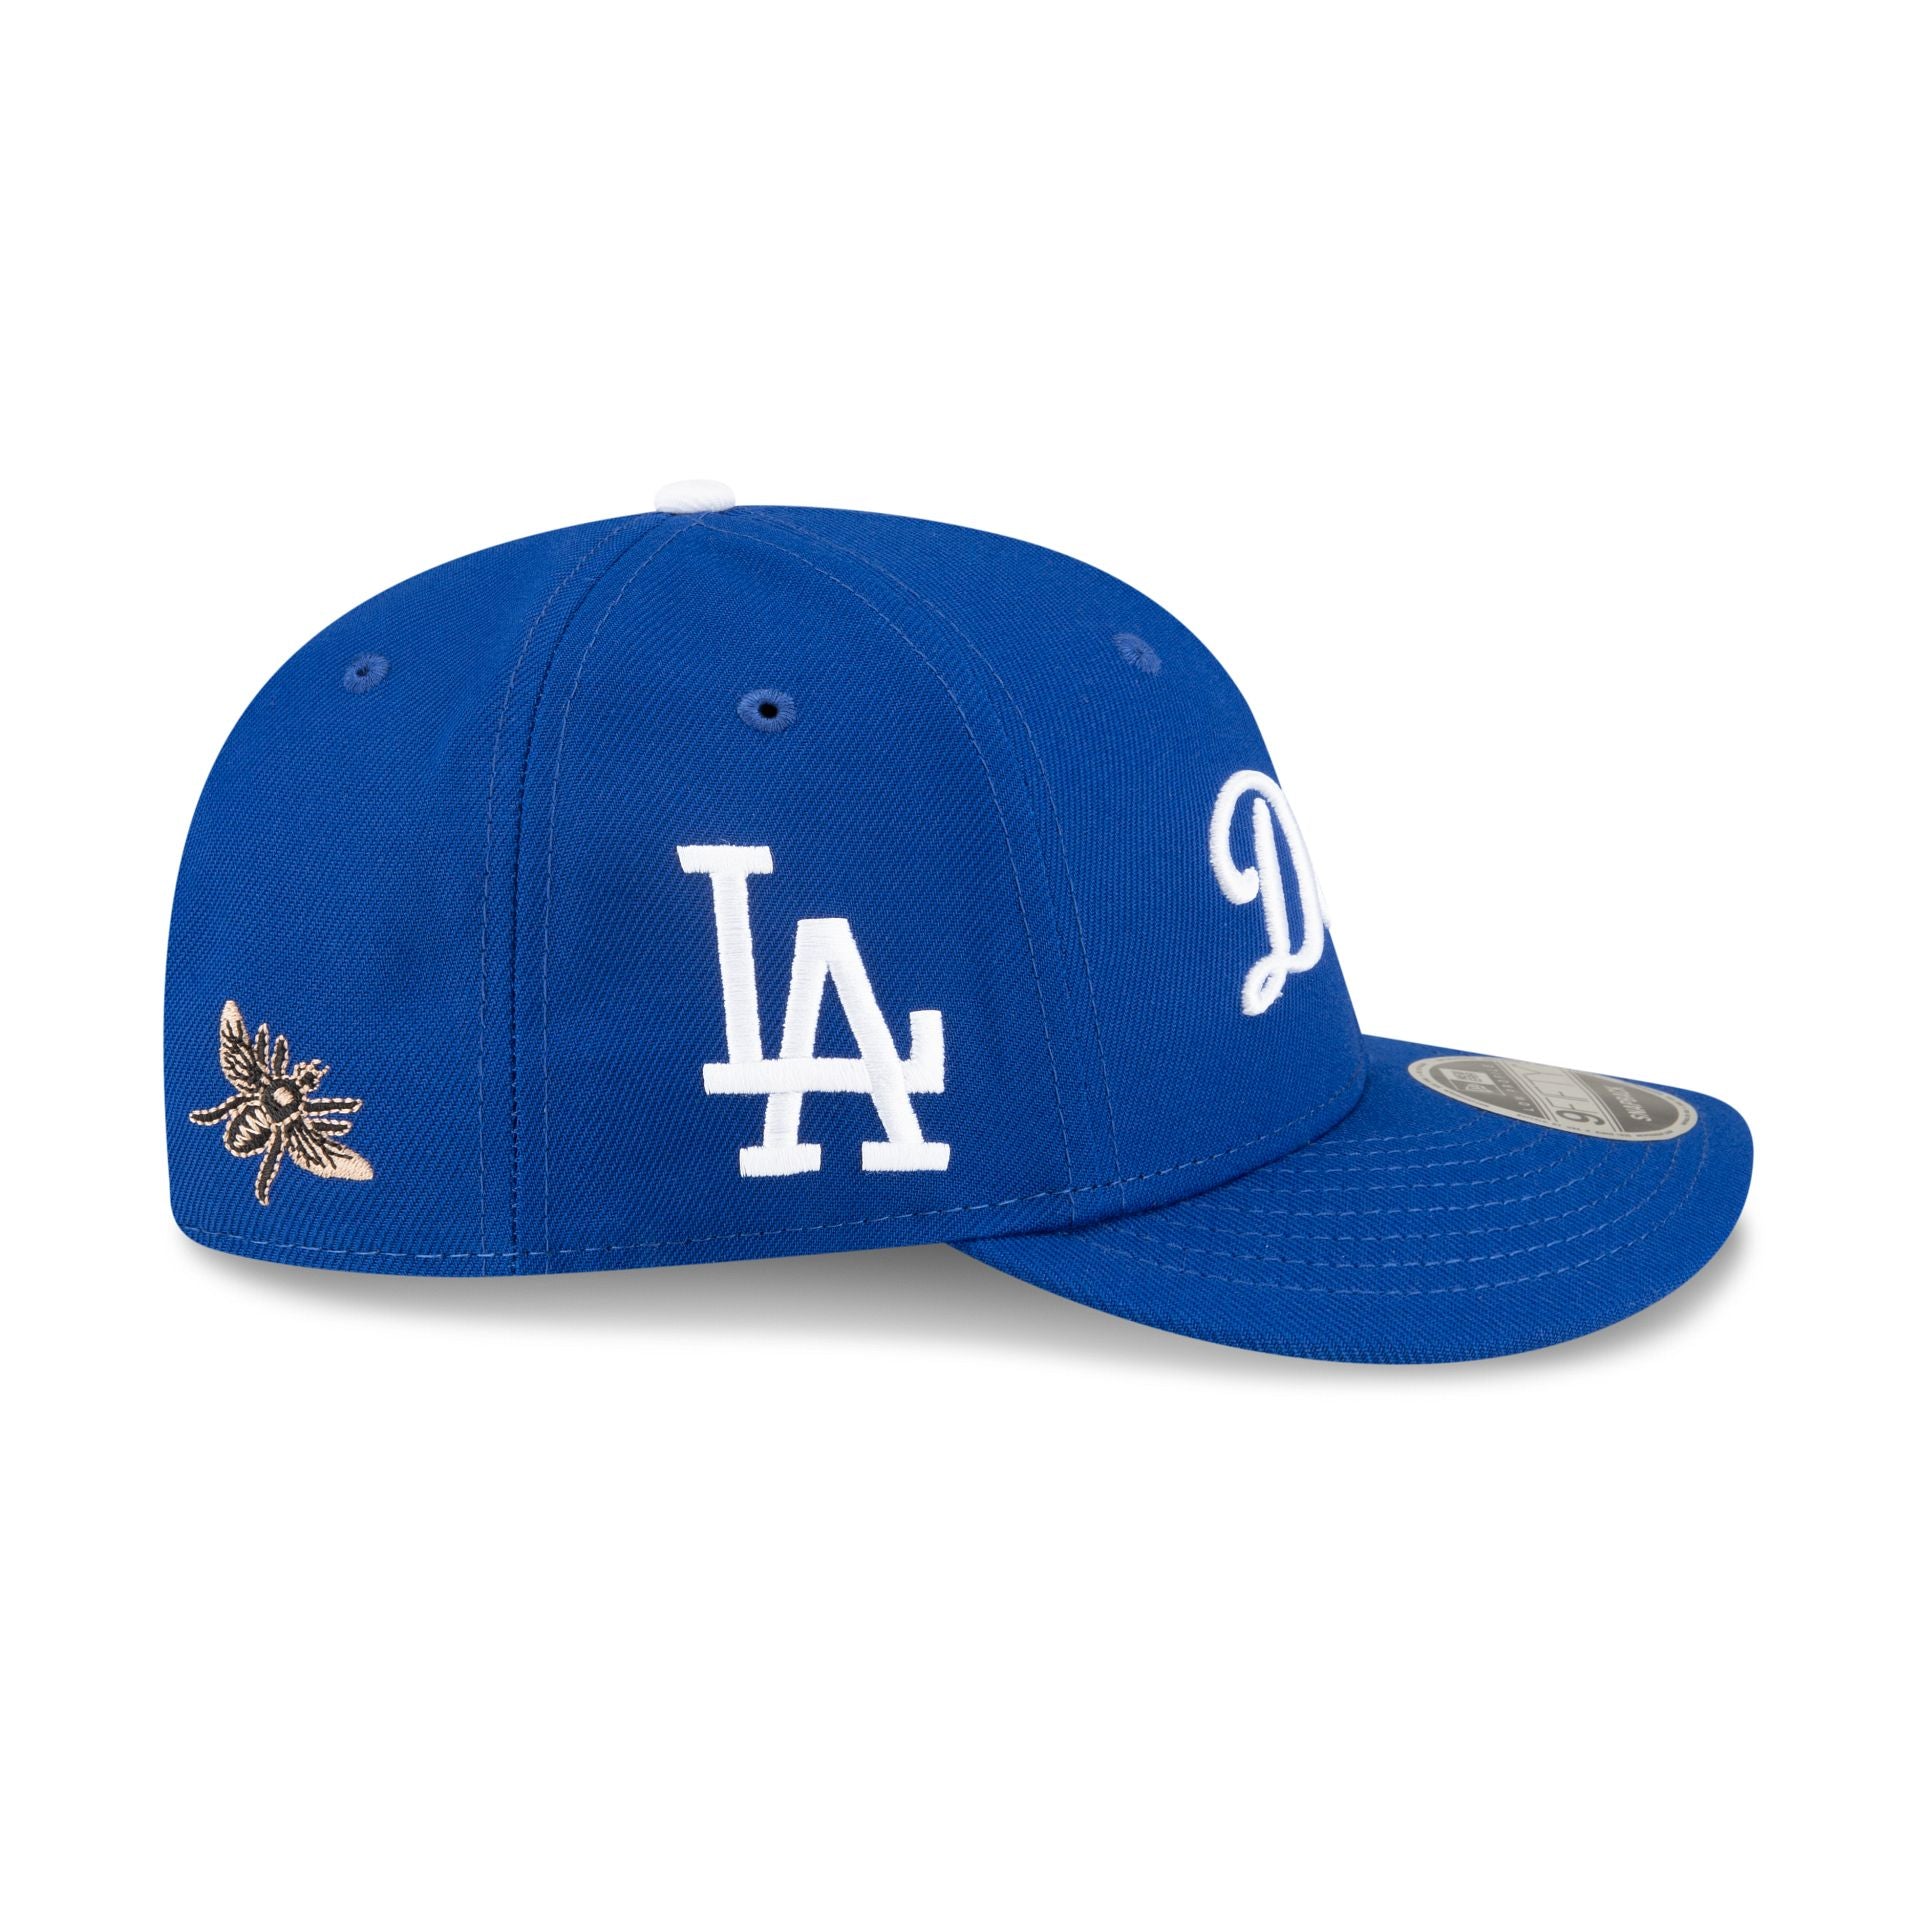 FELT X Los Angeles Dodgers Low Profile 9FIFTY Snapback Hat – New 